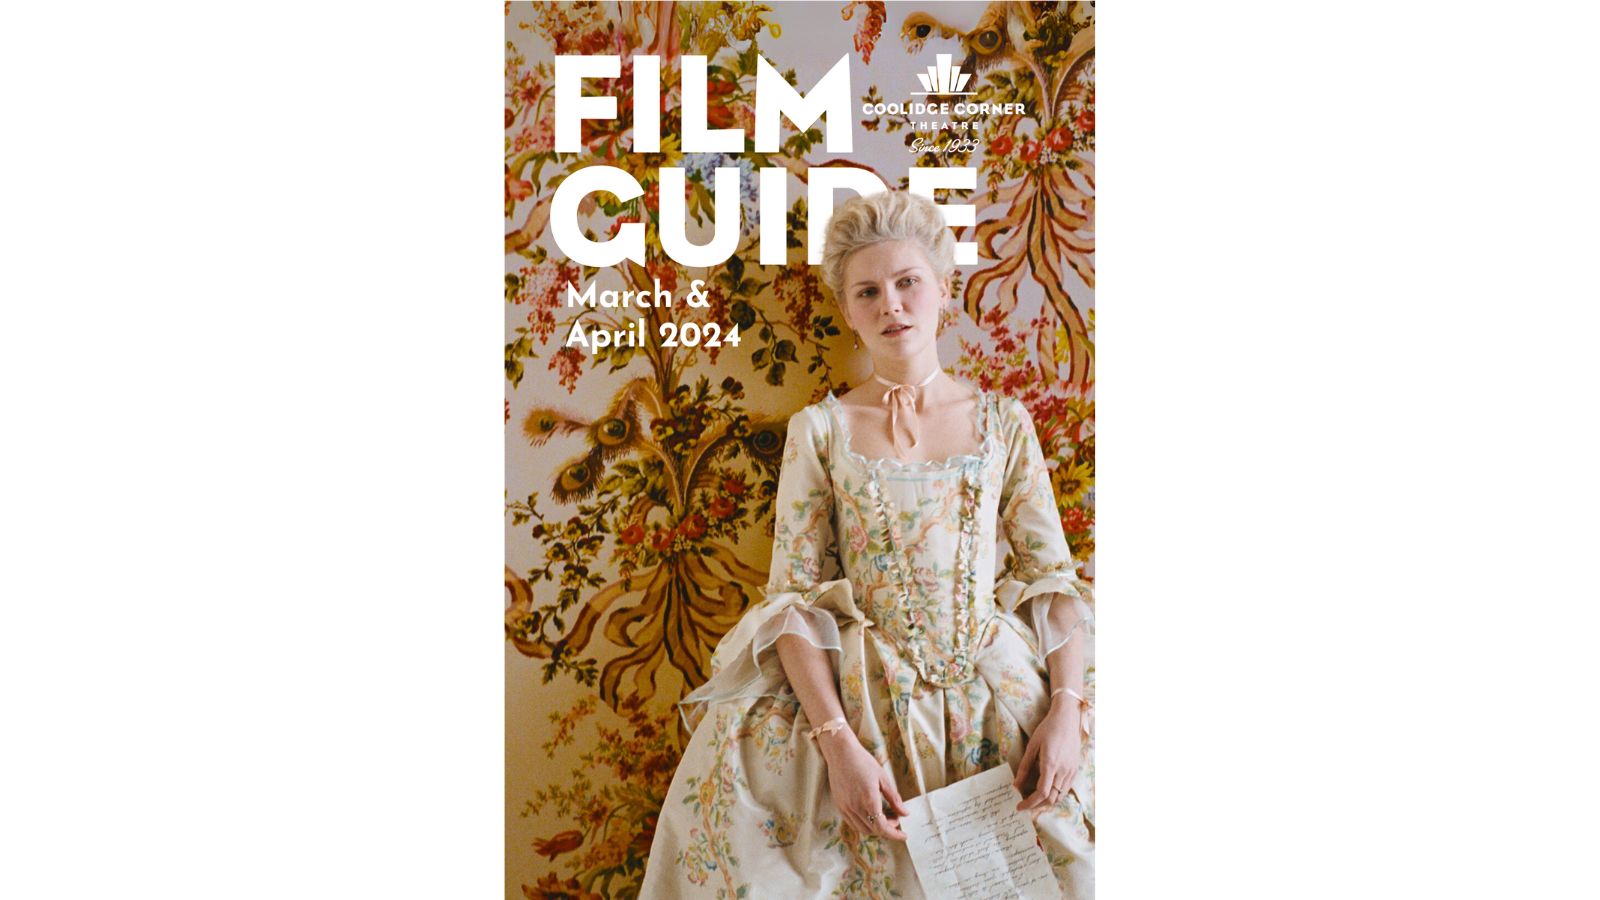 Film guide cover